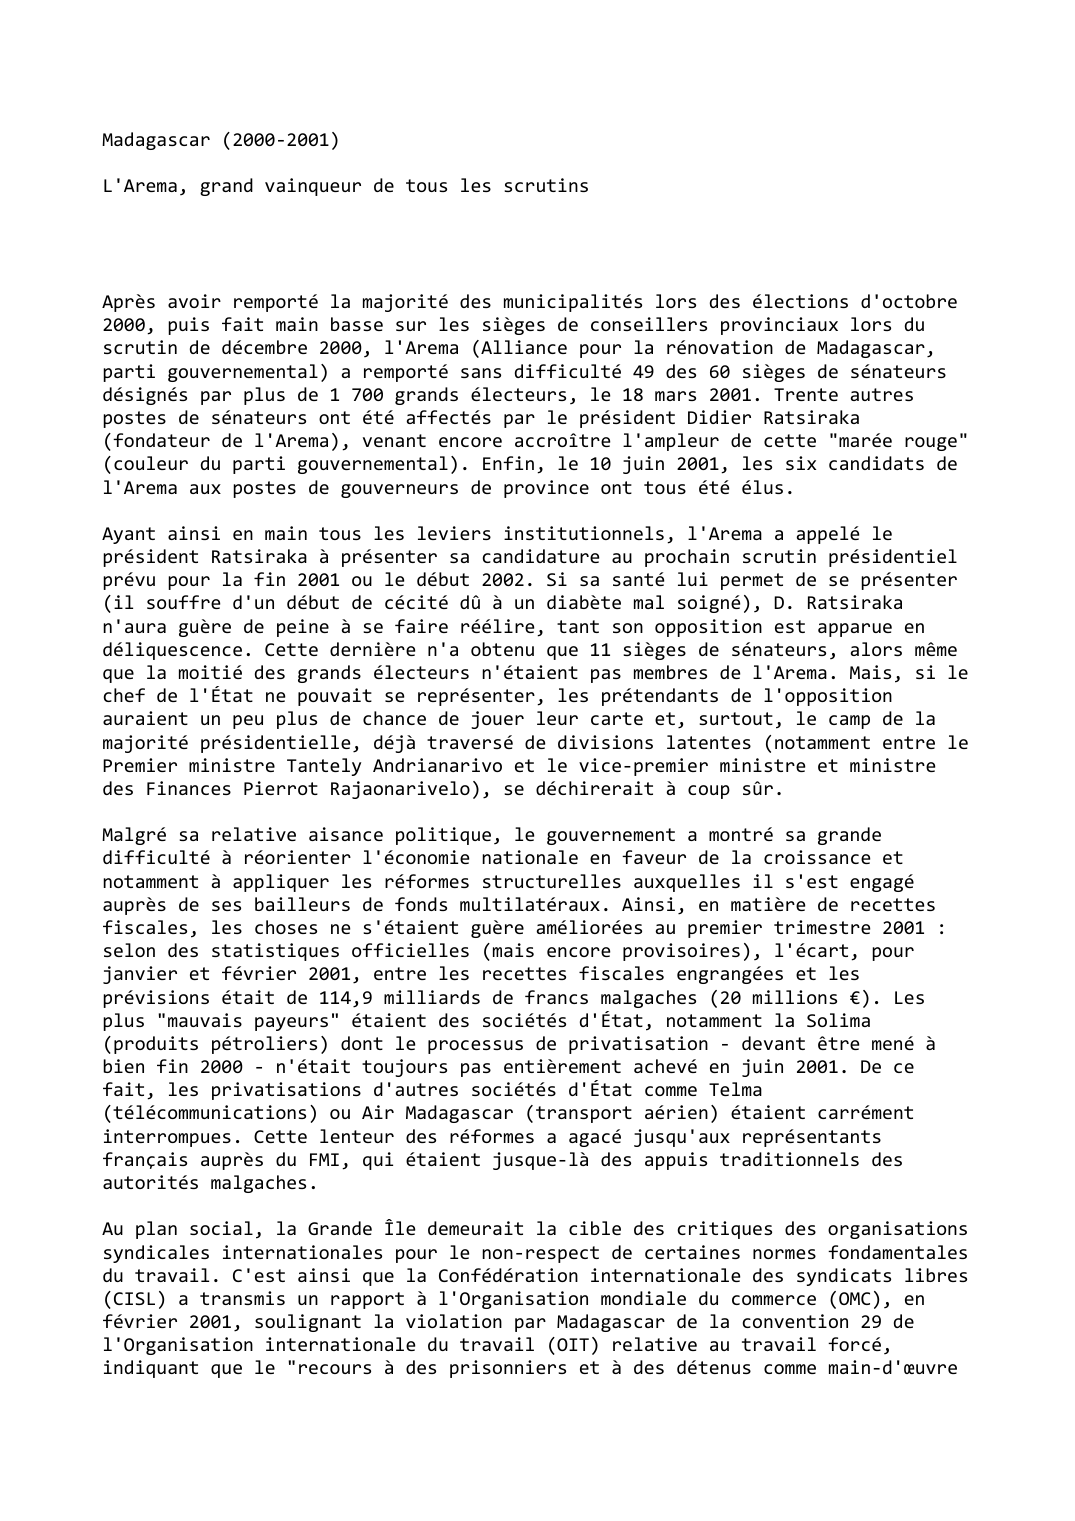 Prévisualisation du document Madagascar (2000-2001)